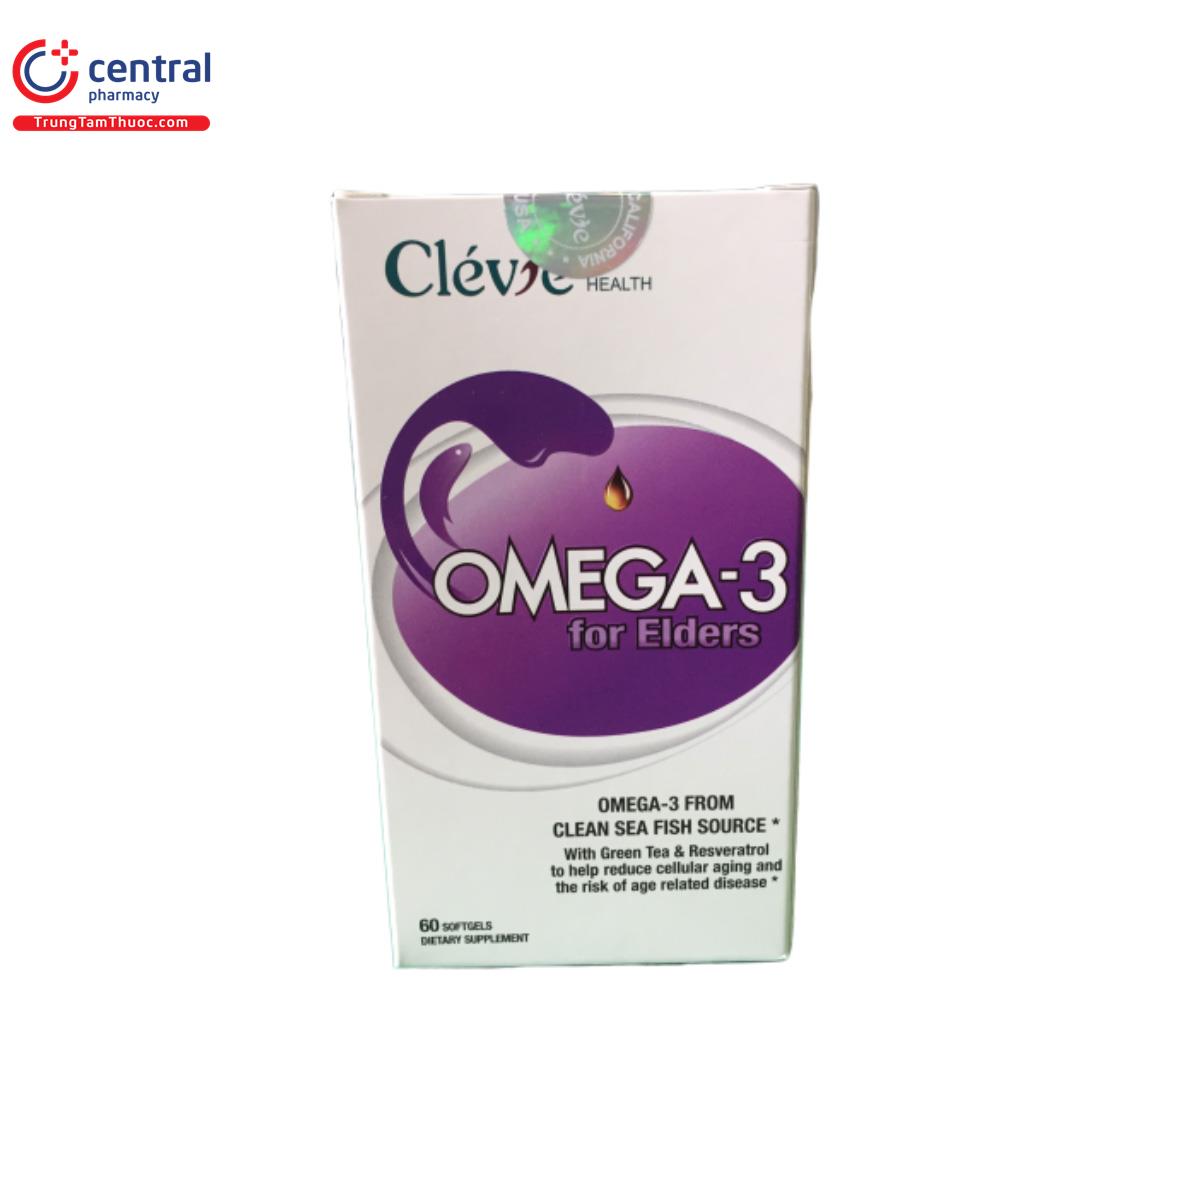 Clevie Health Omega 3 For Elders